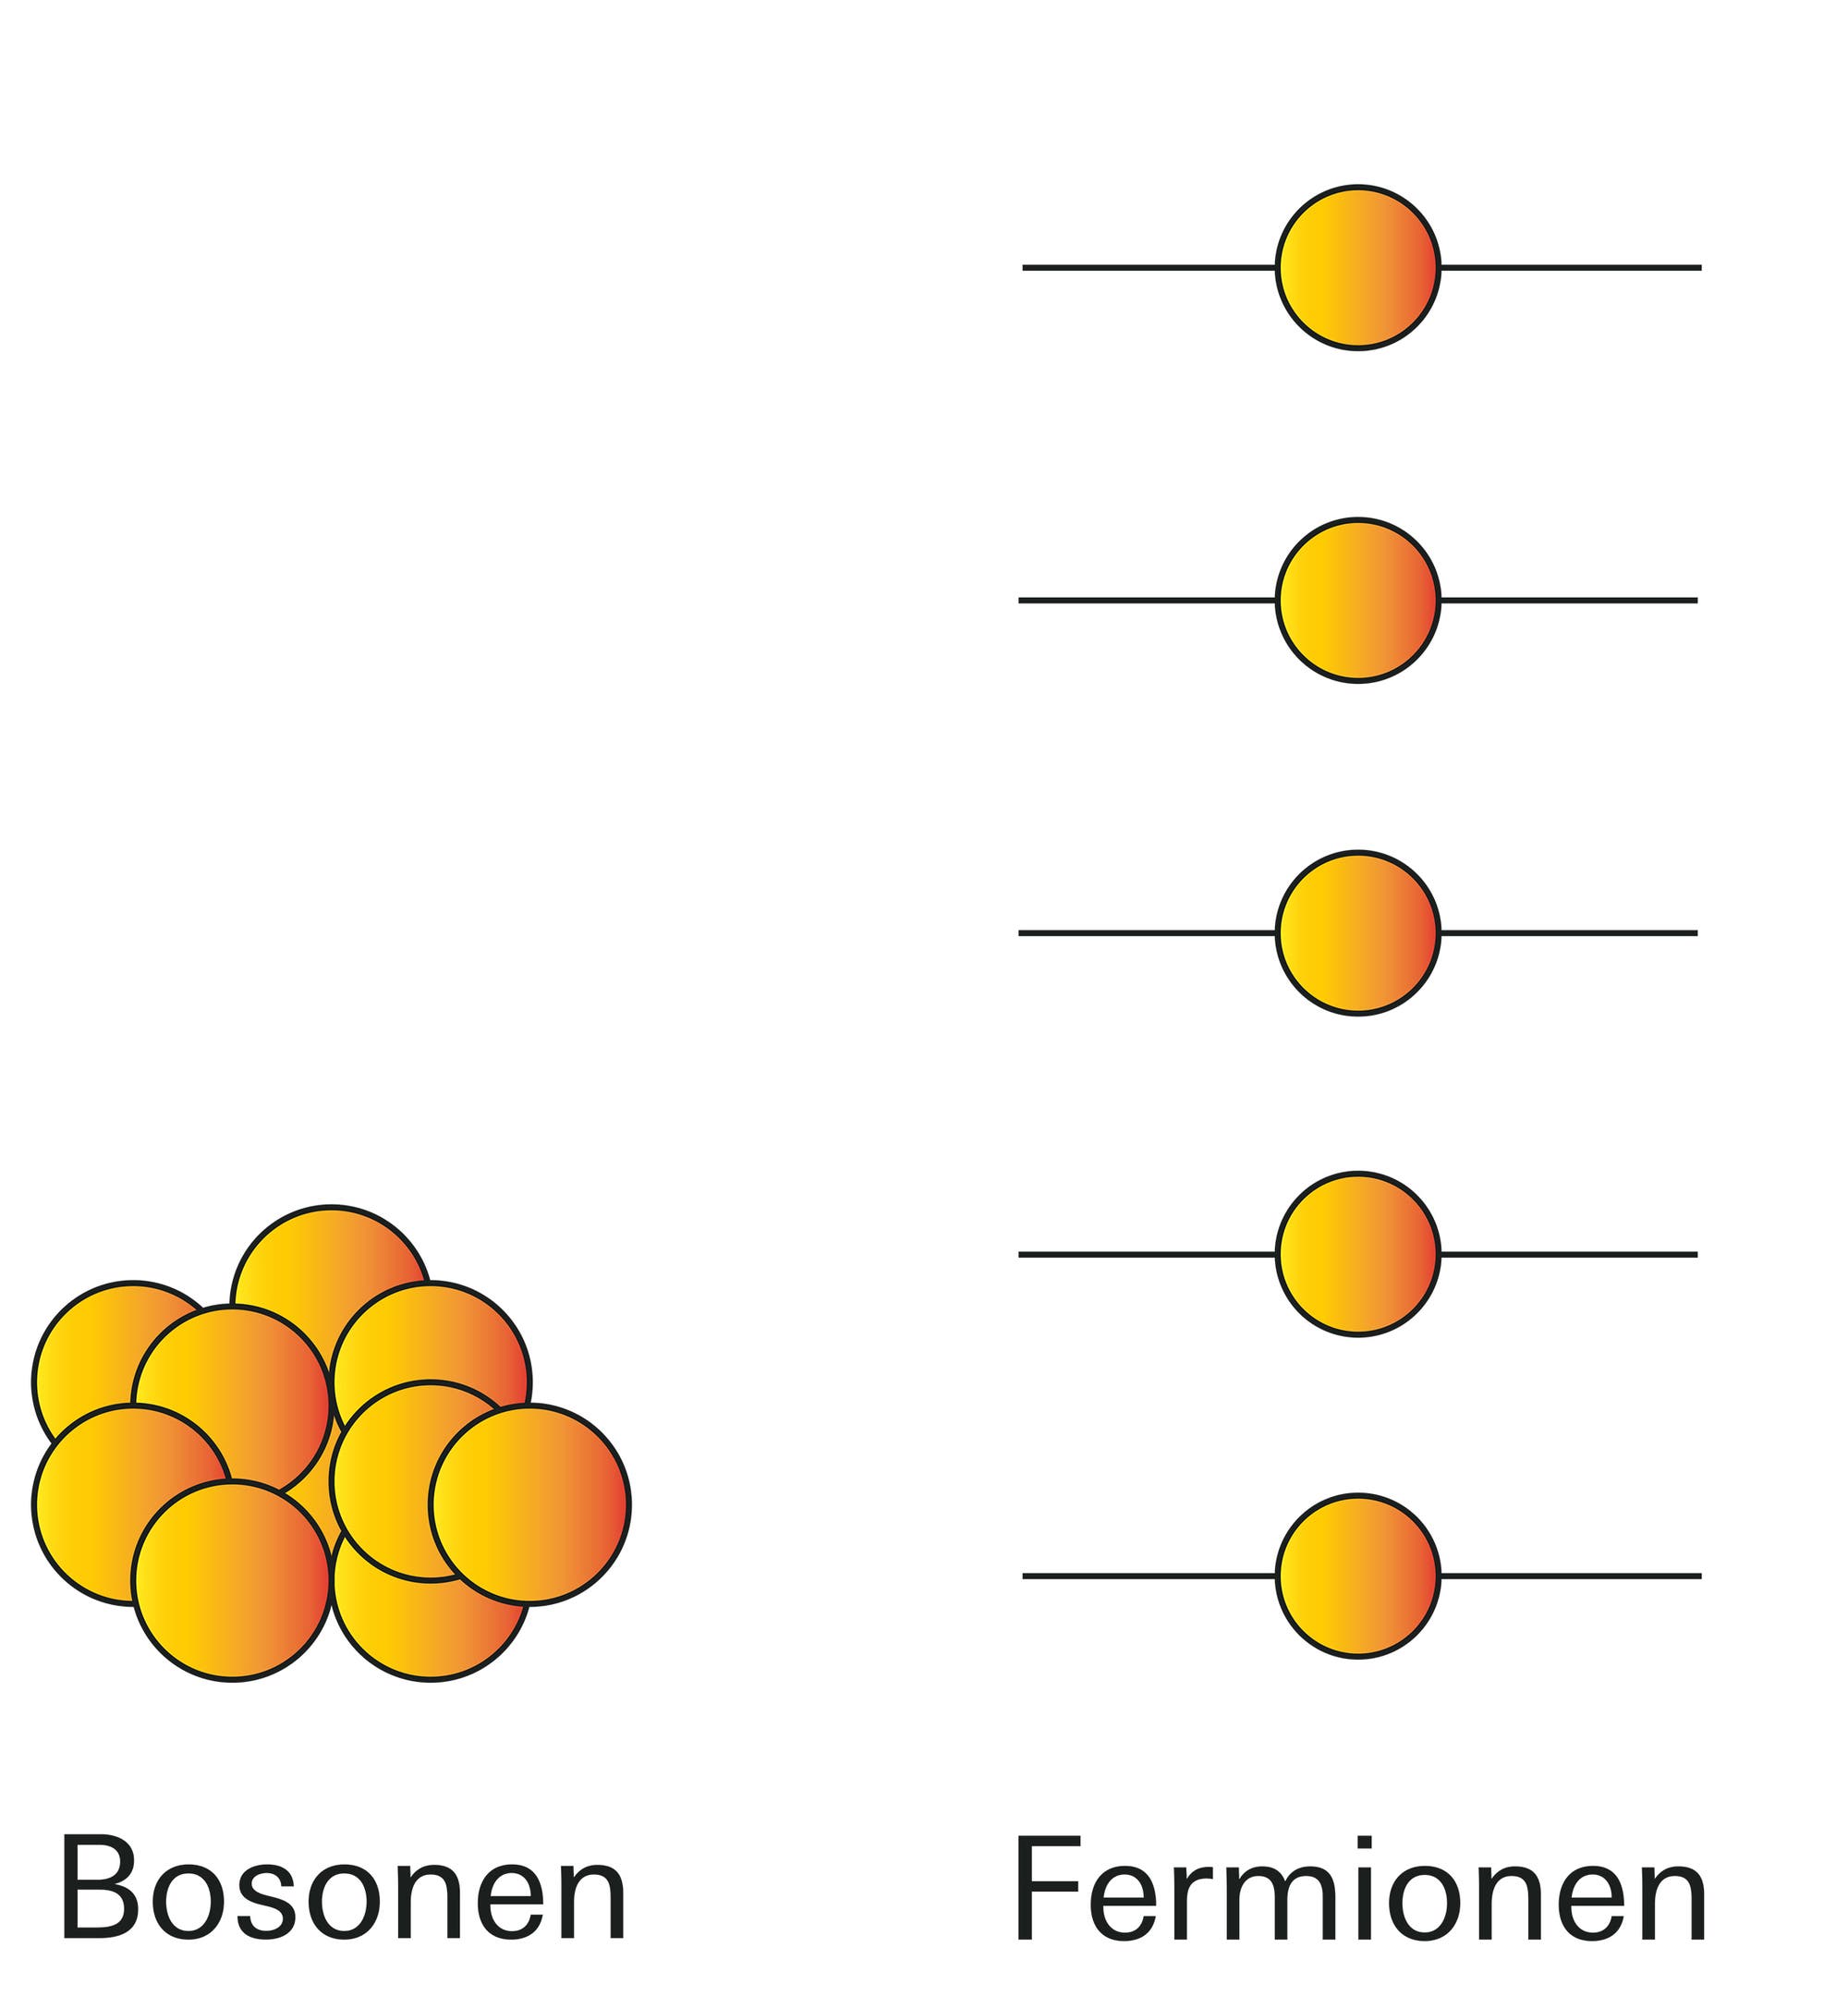 Bosonen und Fermionen